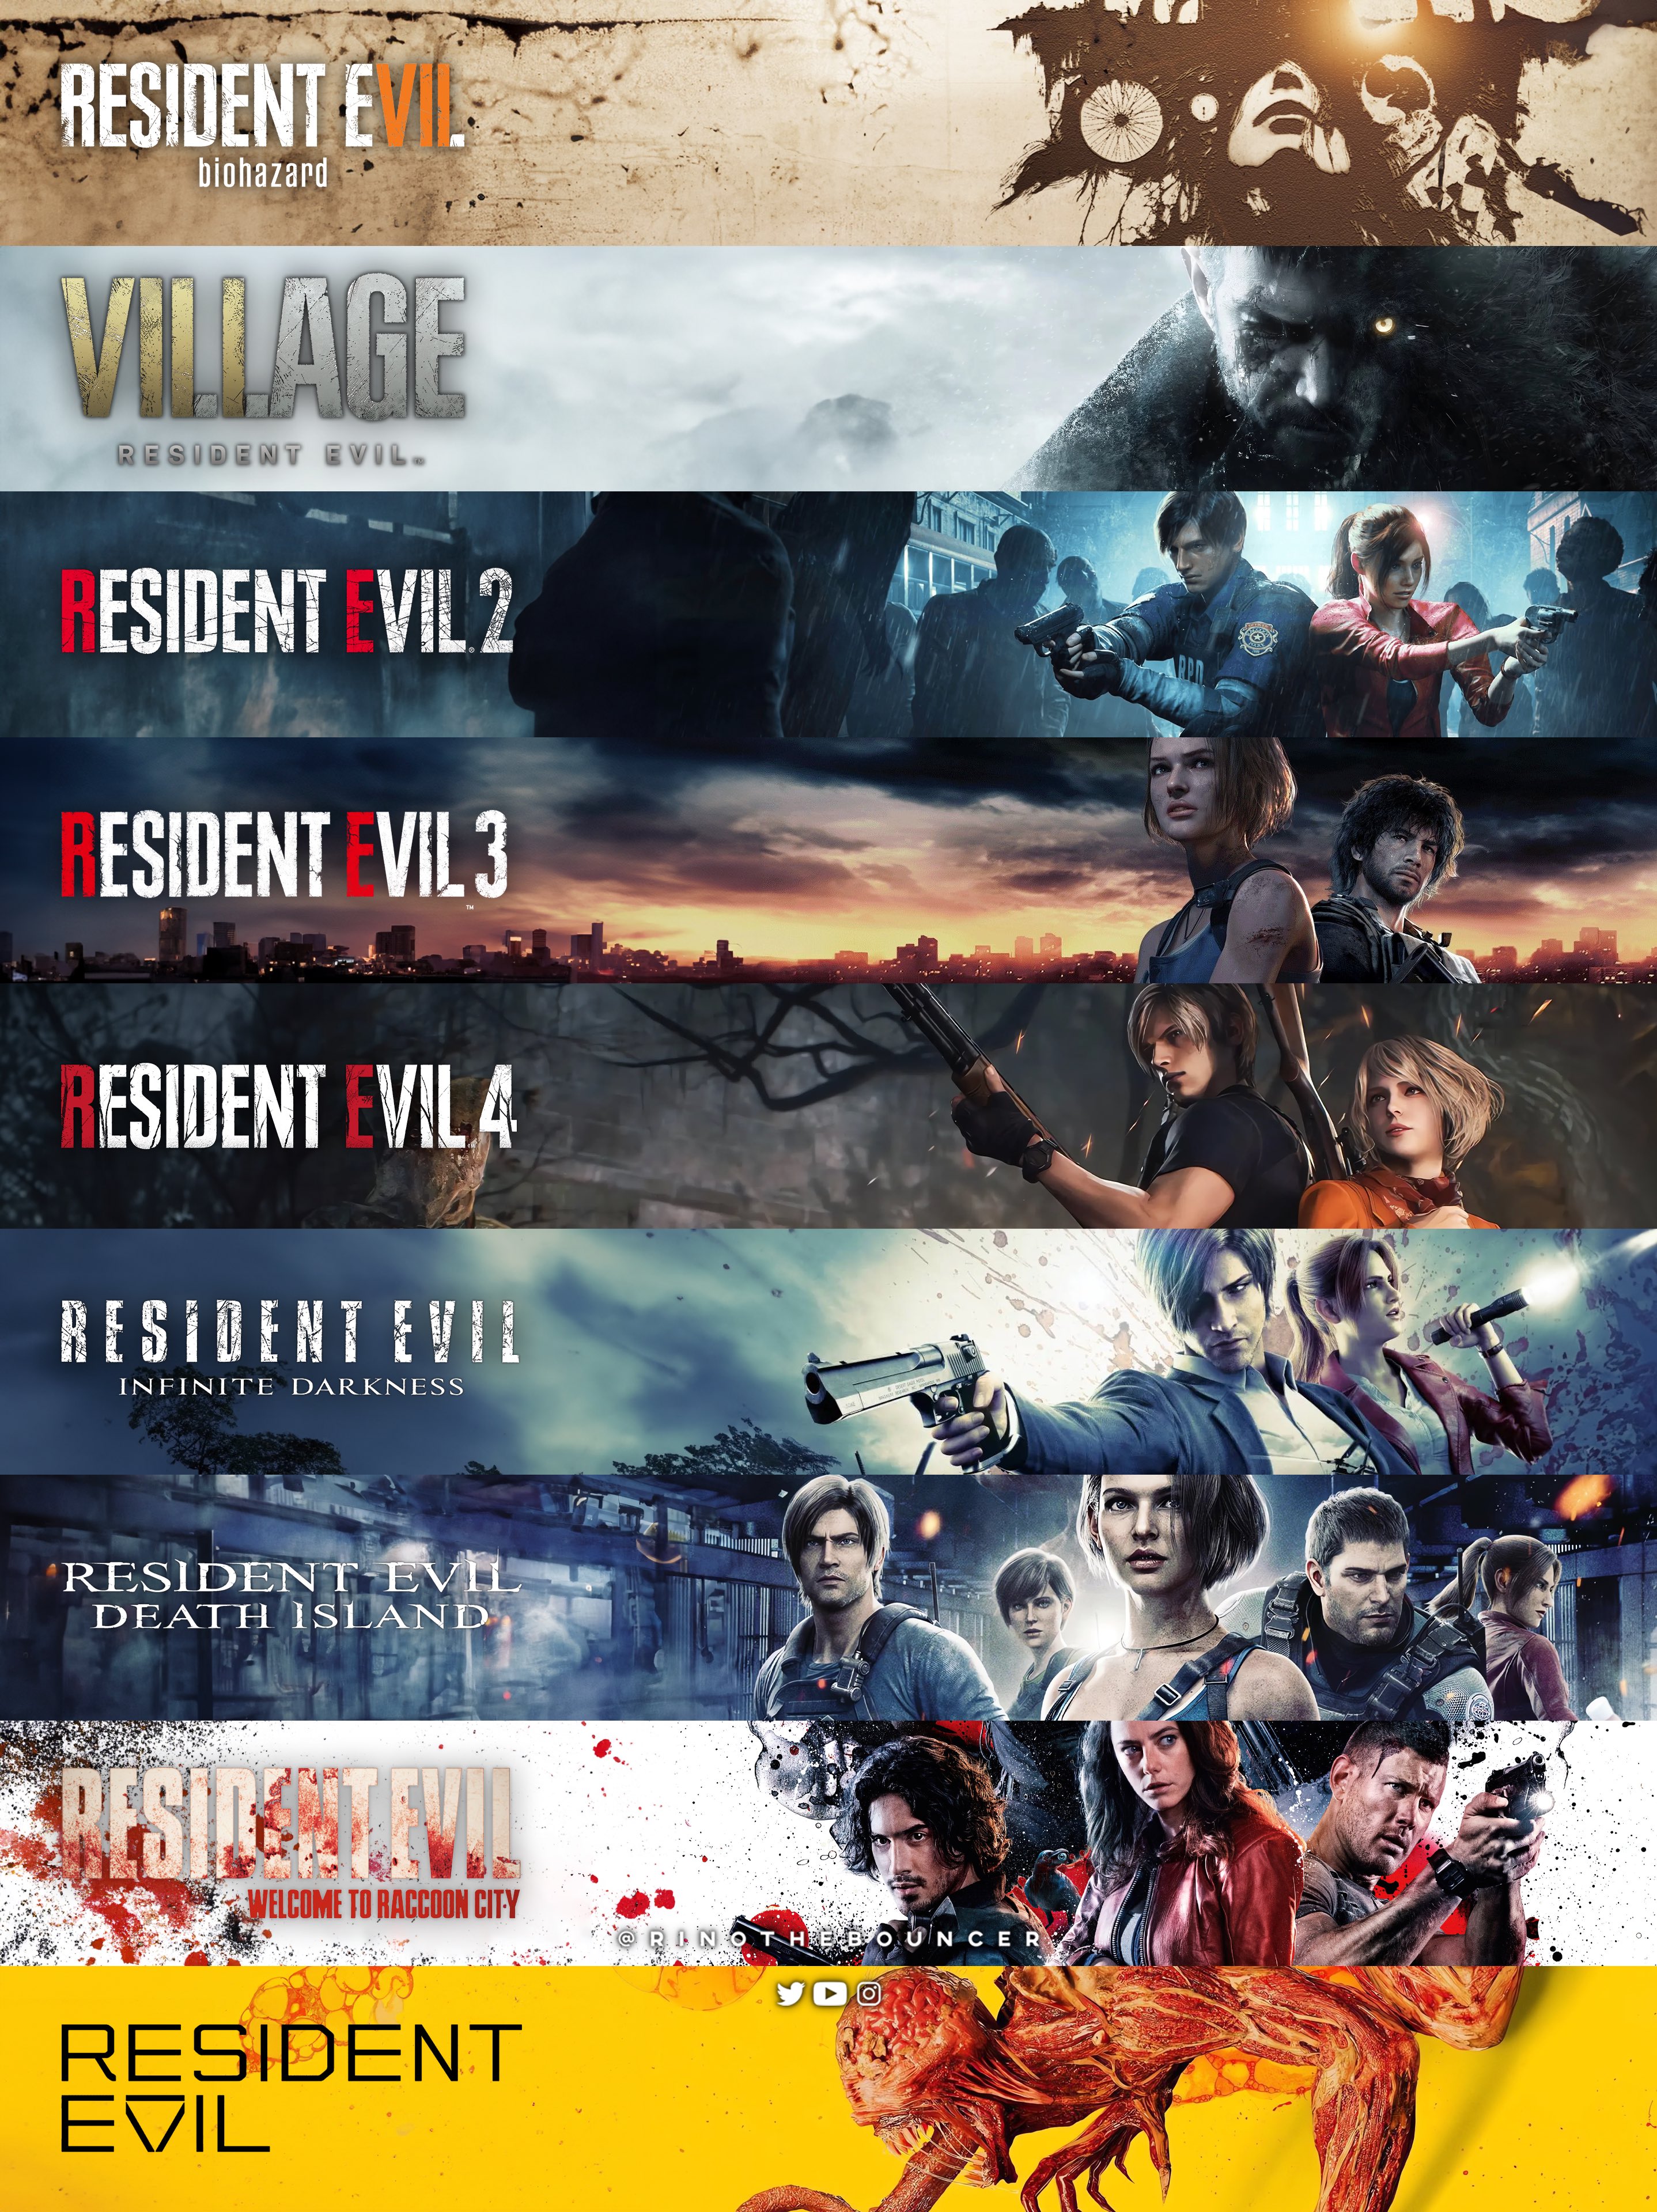 Resident Evil Village synopsis, ending, post-credit scene explained - CNET